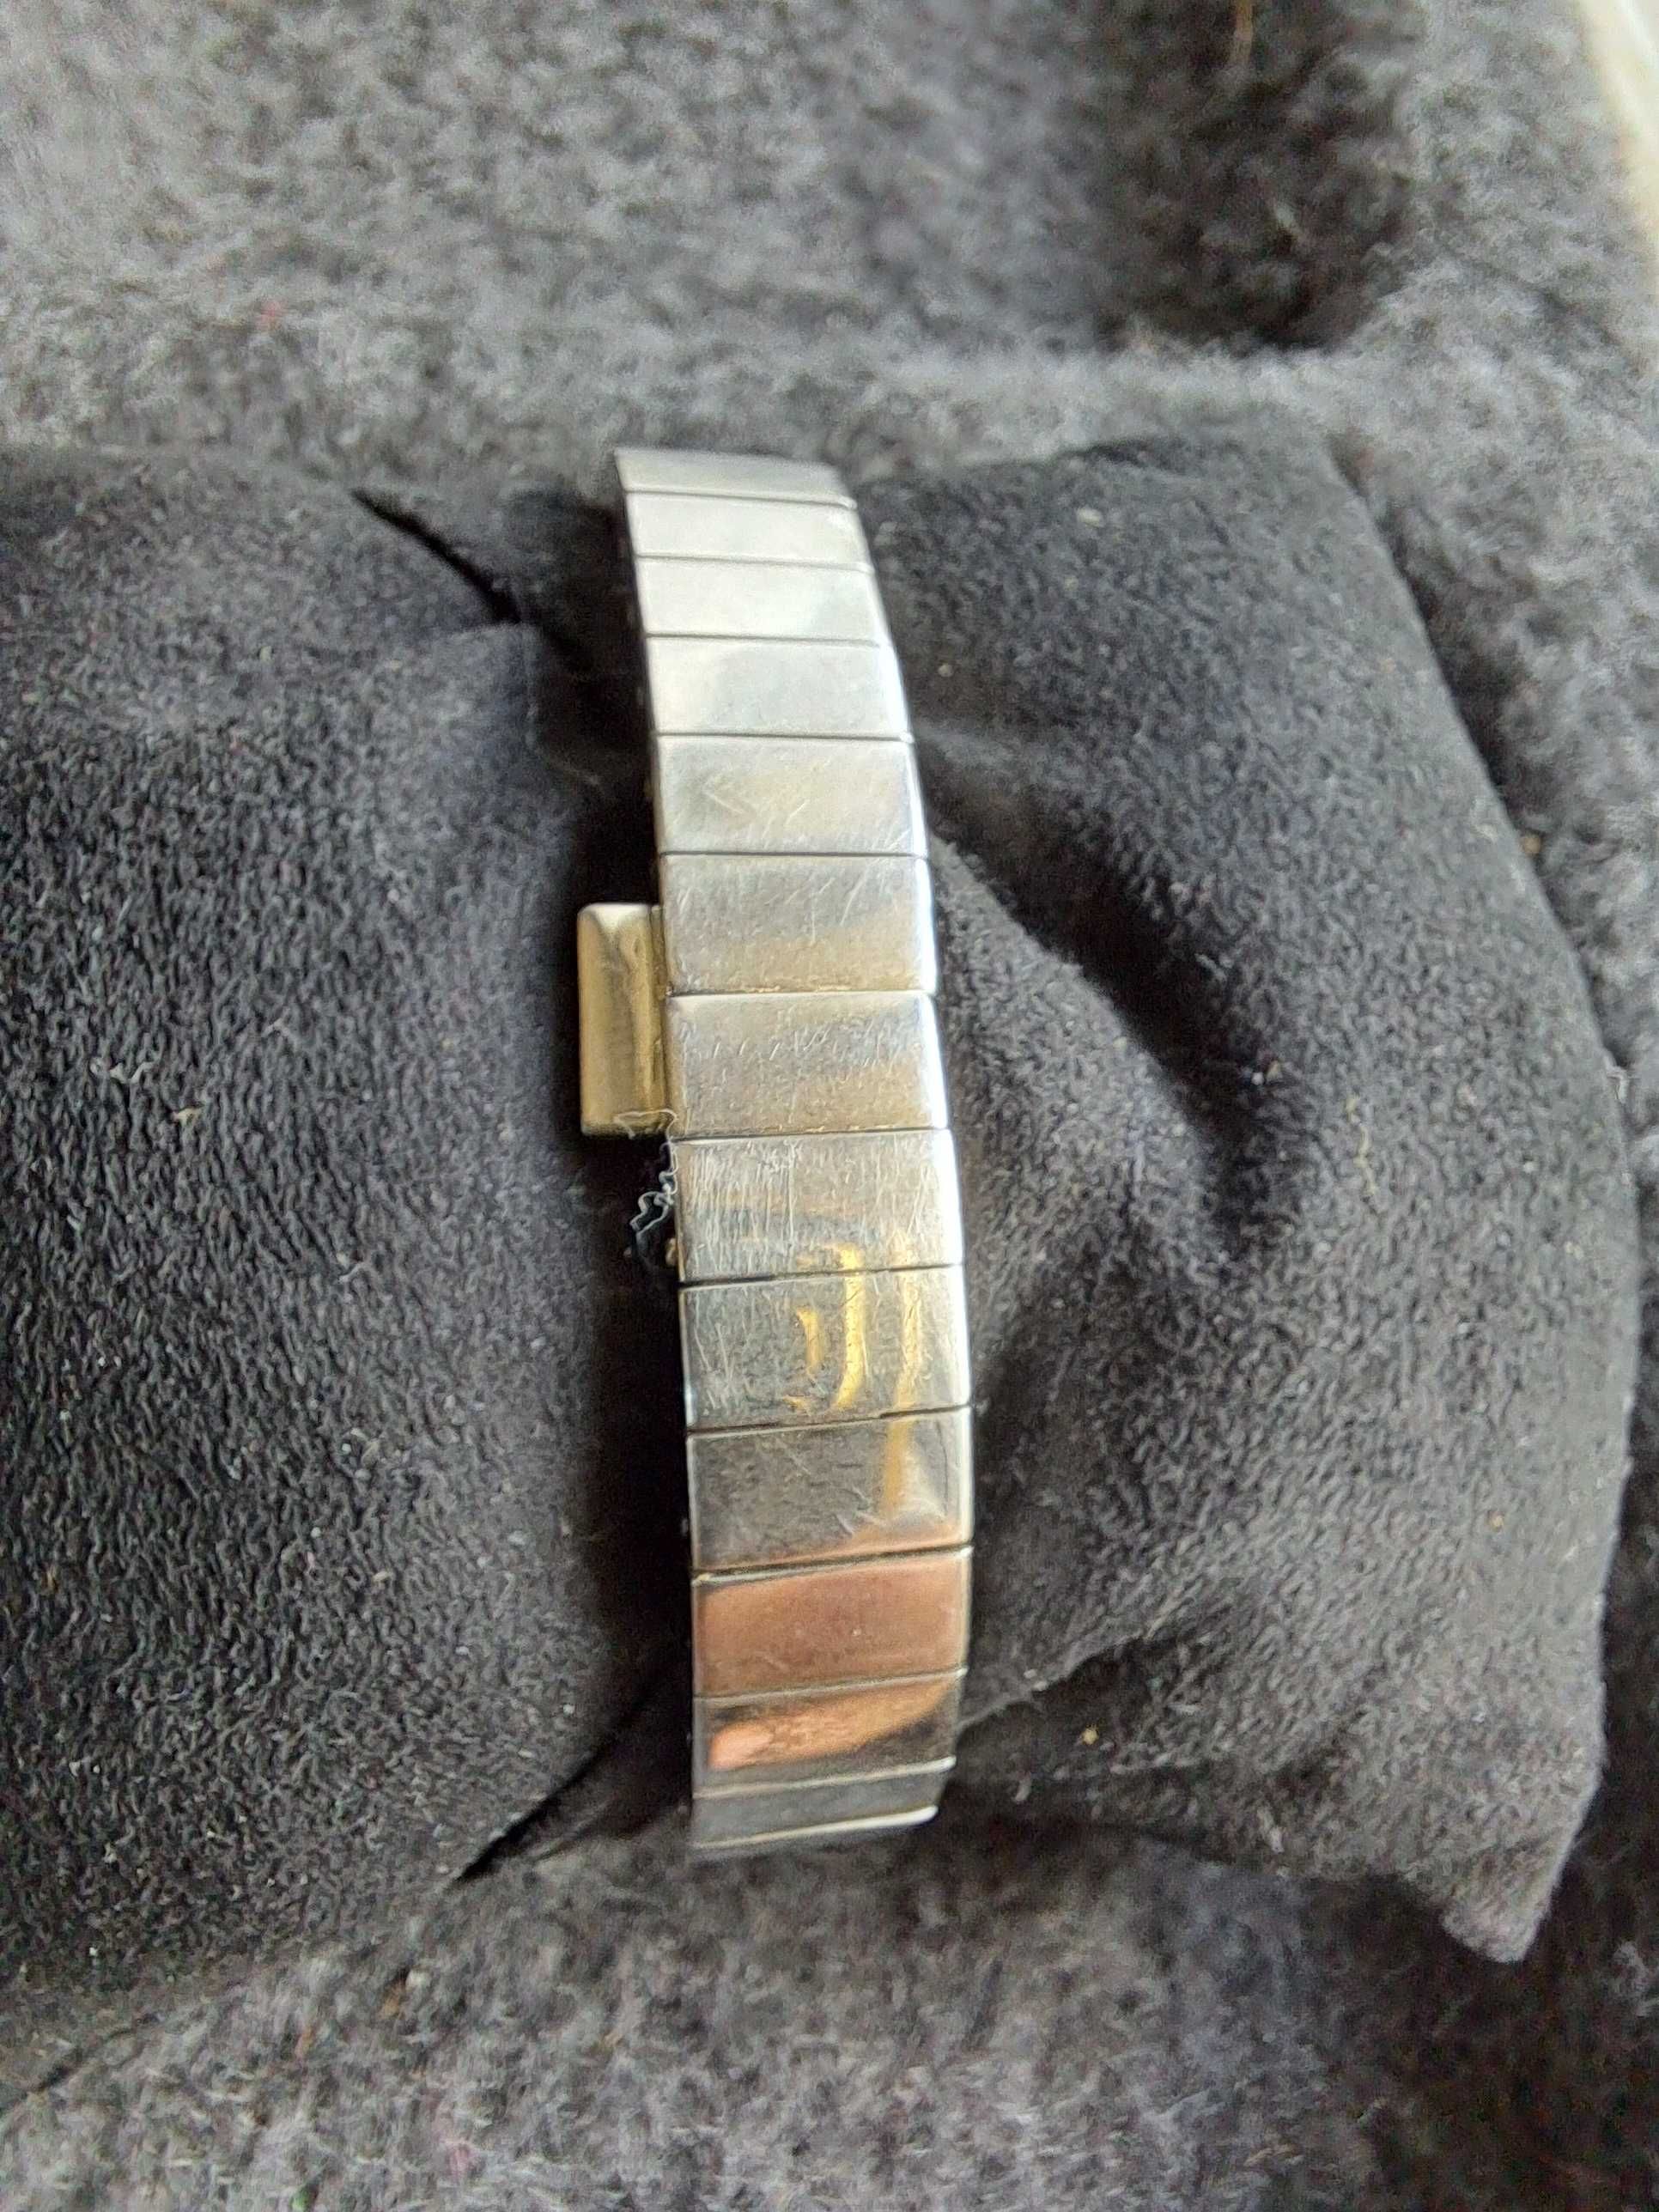 Damski zegarek Tissot TTONNEAU T621.29581 z diamentami. Piękny !